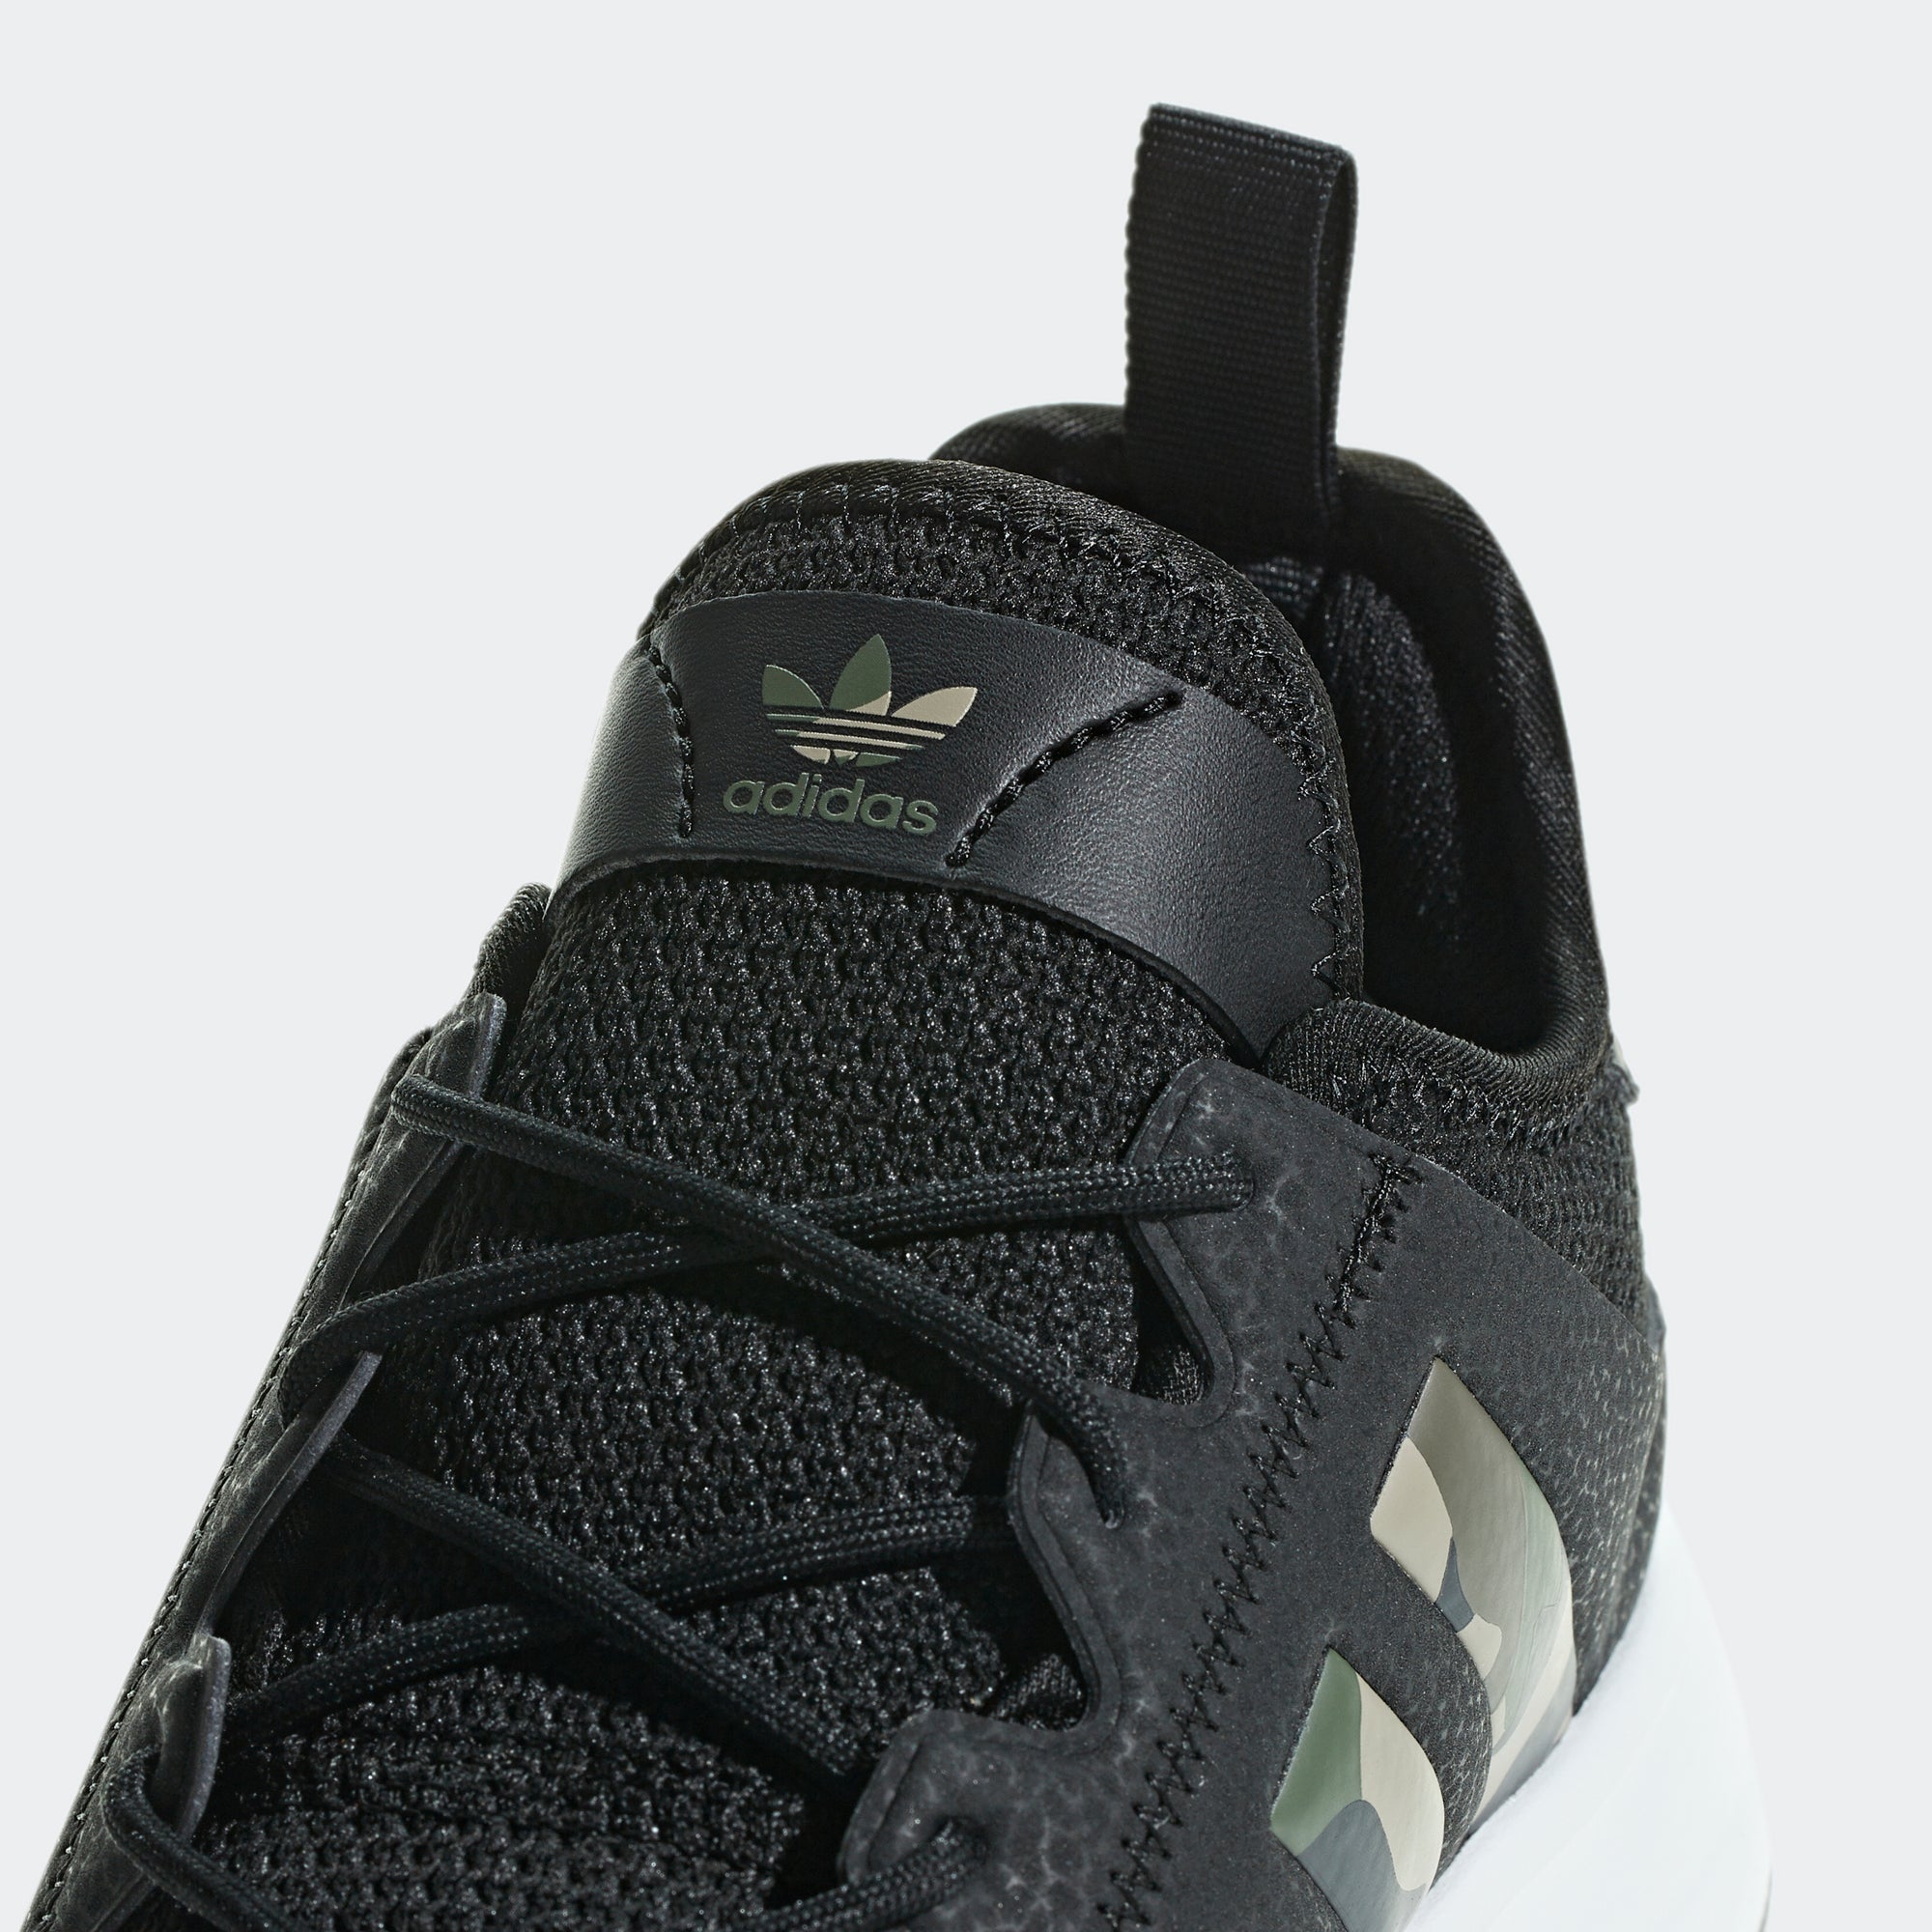 adidas x_plr core black & camo shoes